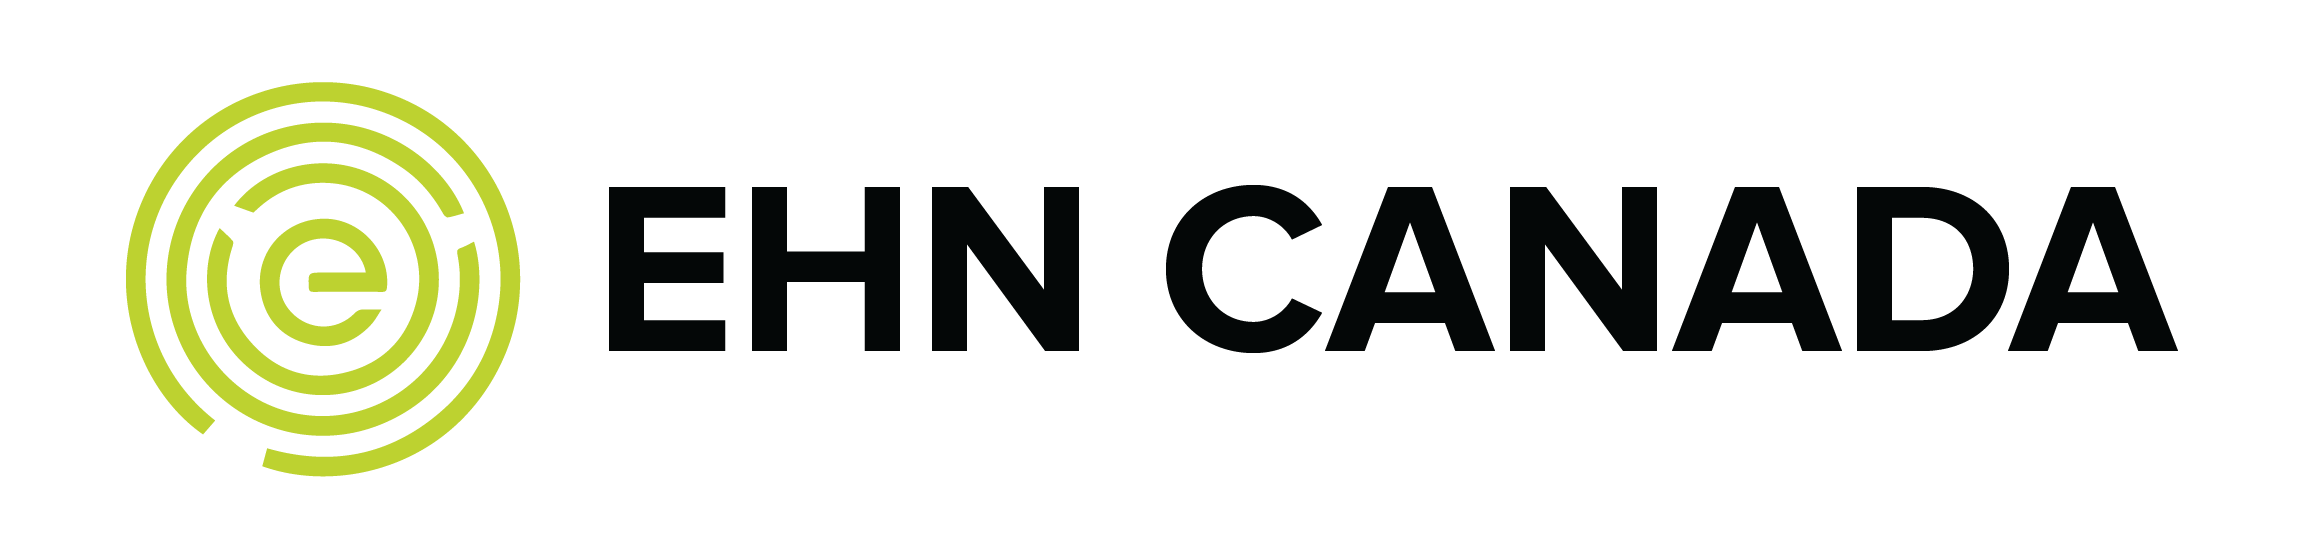 EHN Canada logo